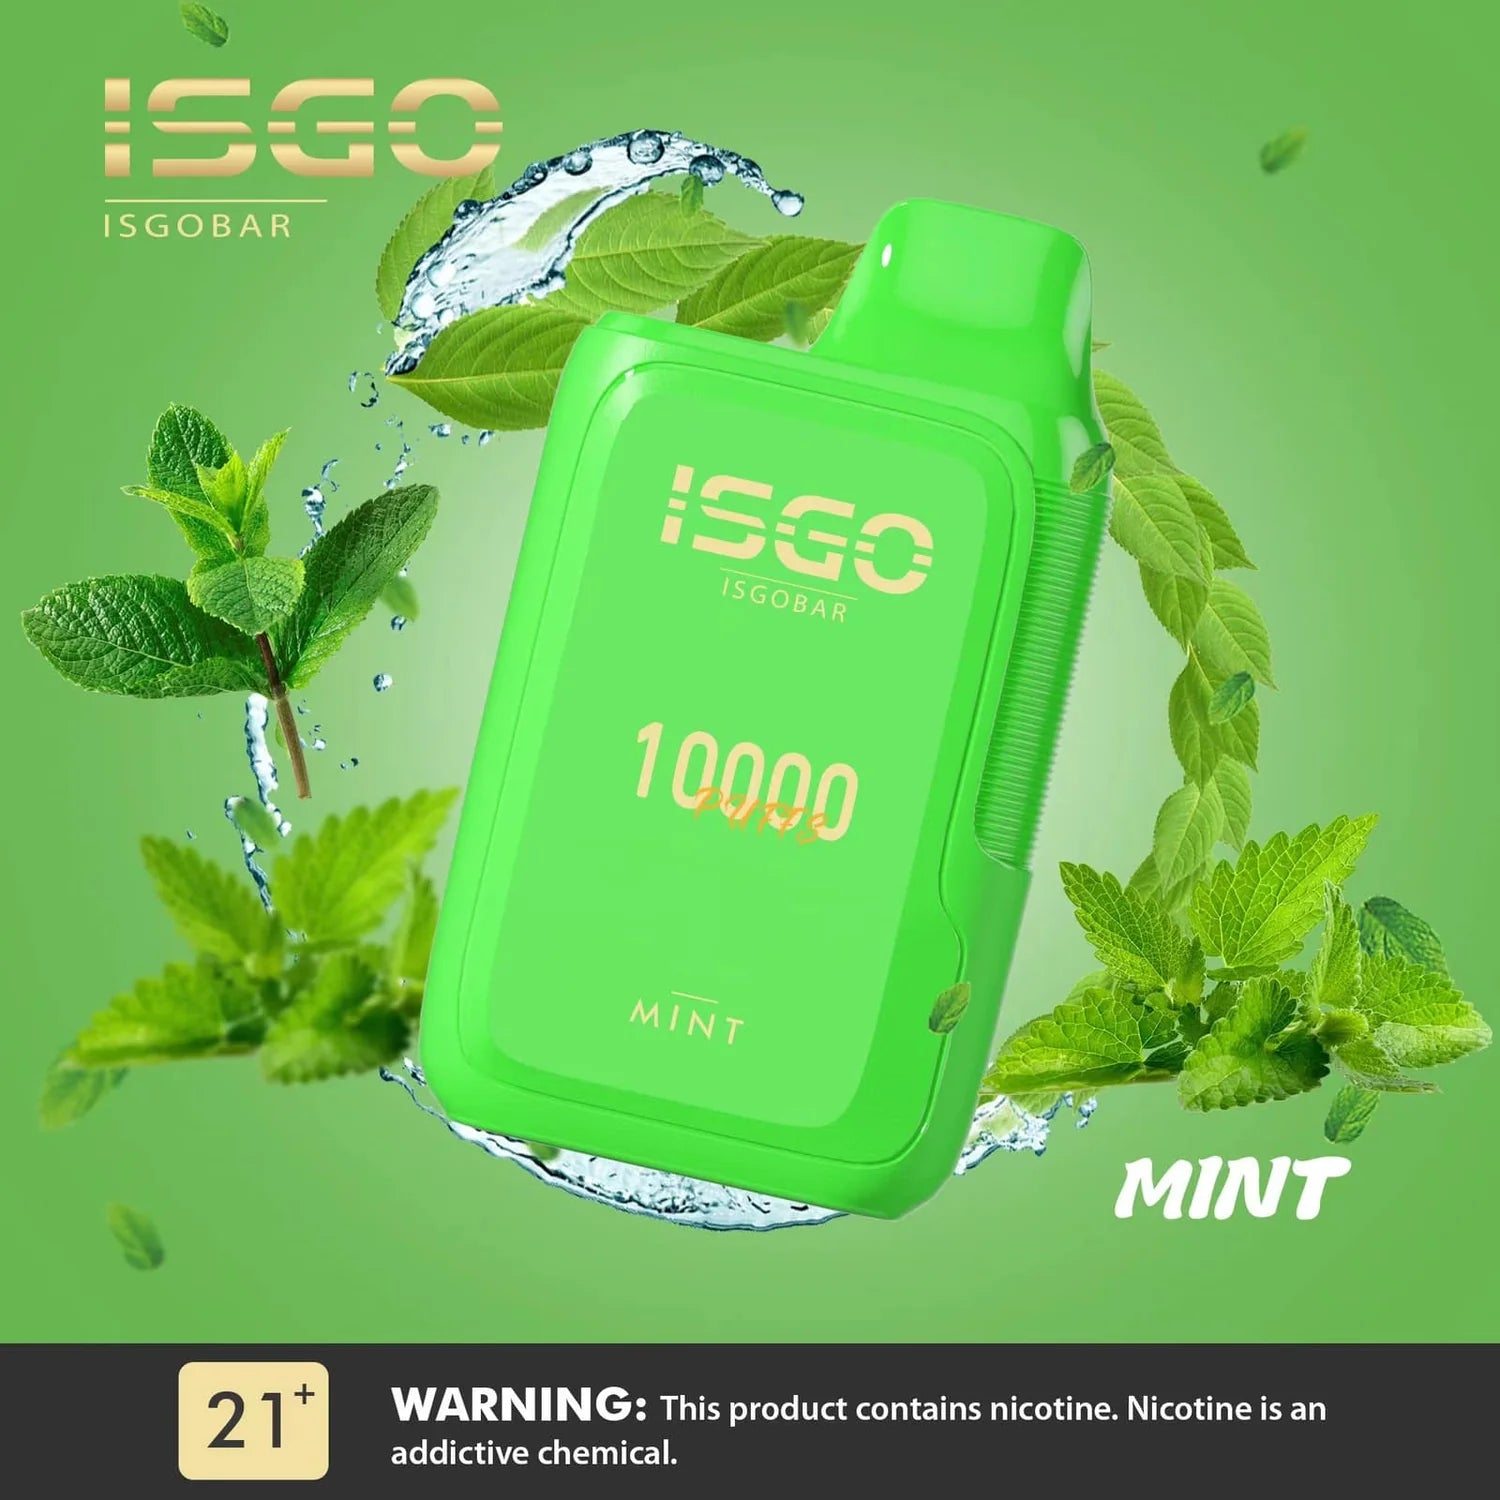 ISGO BAR 10000 - MINT